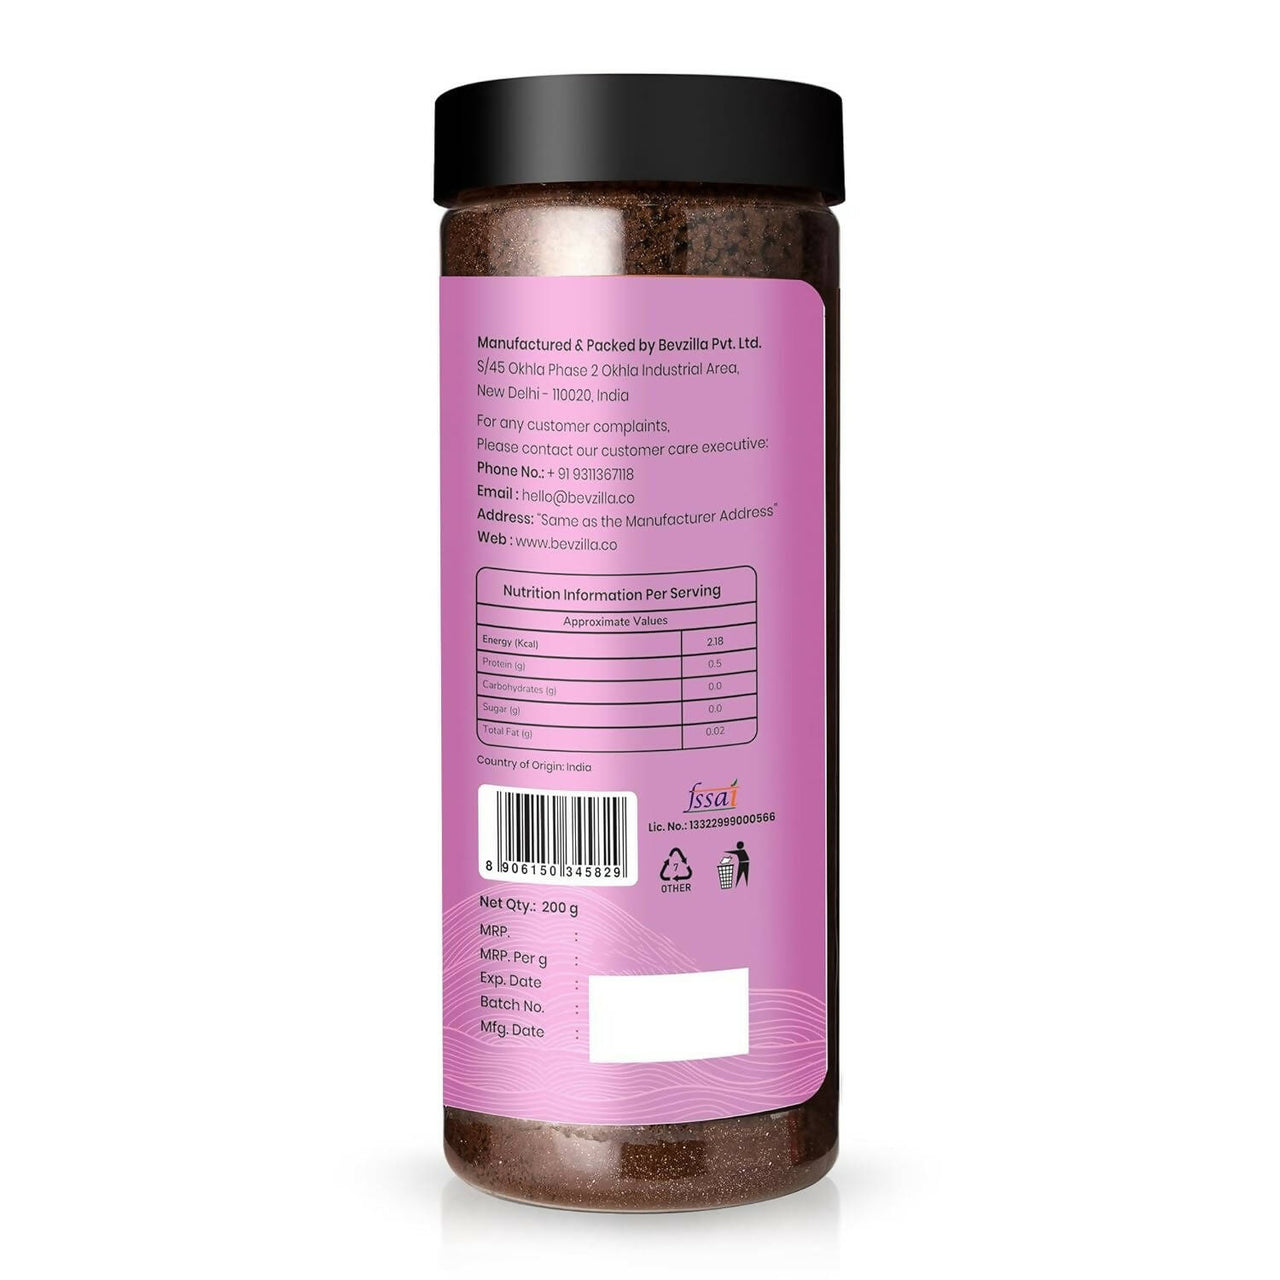 Bevzilla Premium French Vanilla Coffee Powder 100% Arabica - Distacart